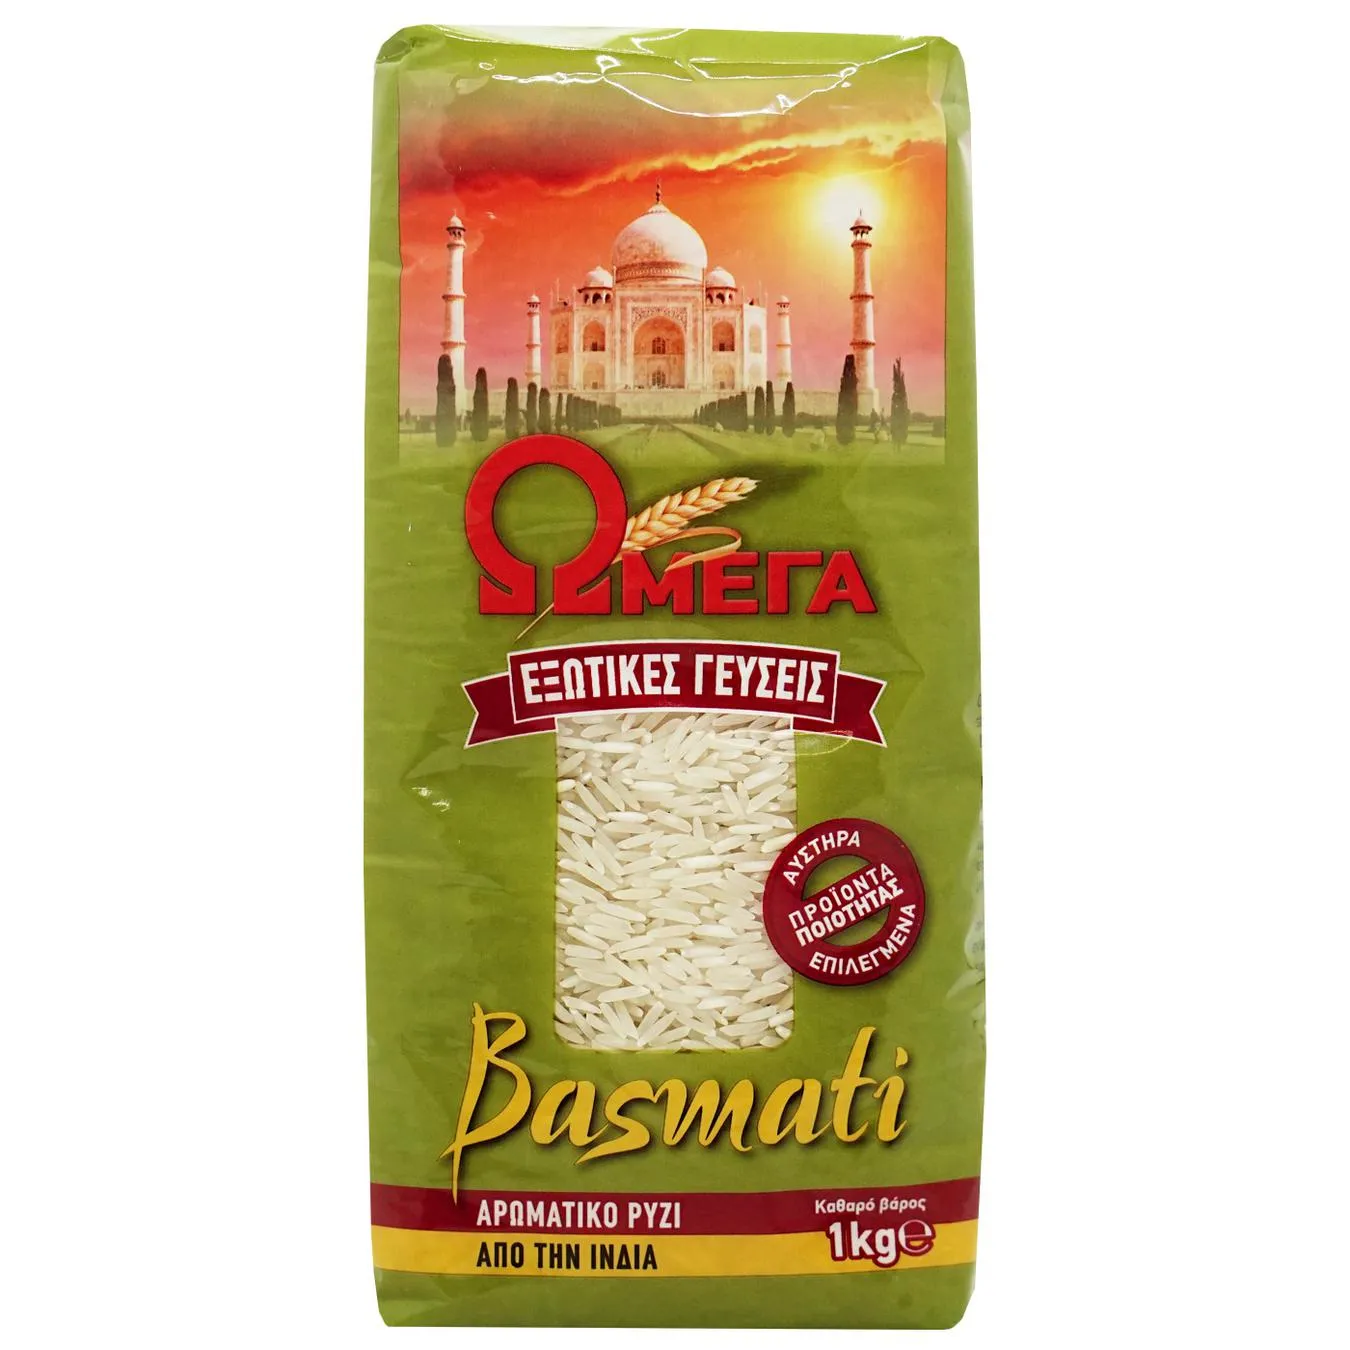 Omega Basmati long rice 1kg